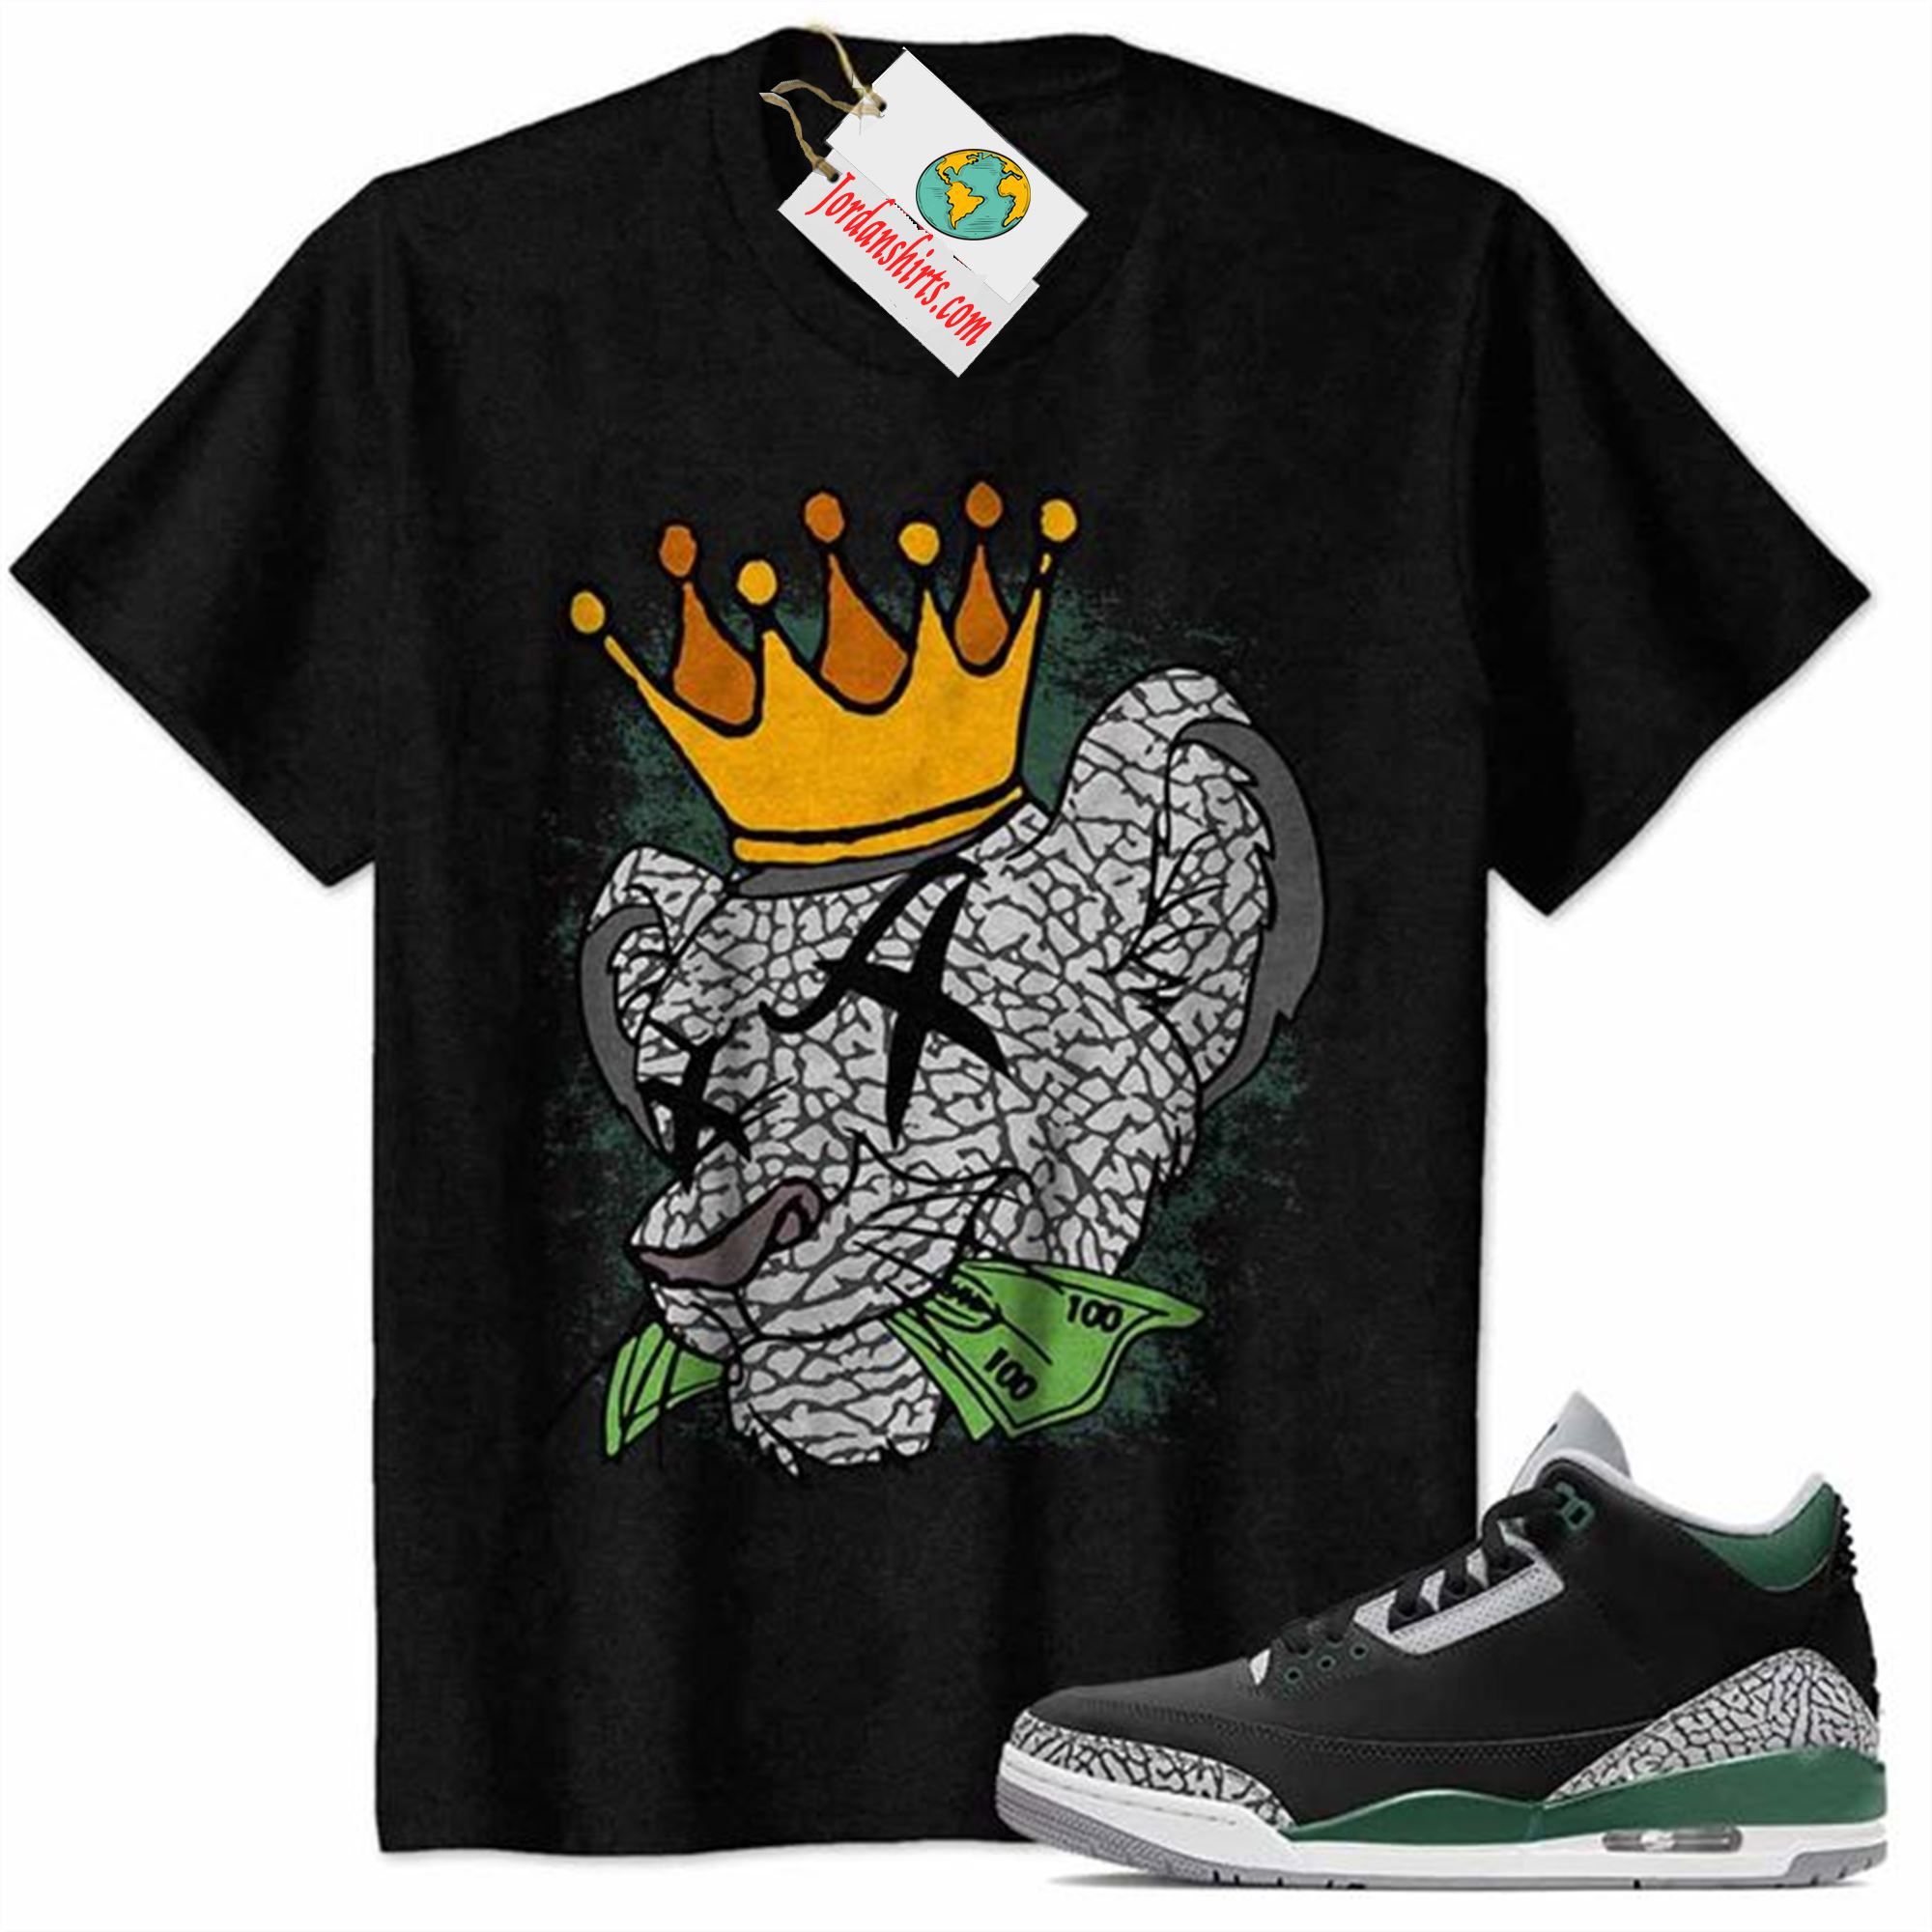 Jordan 3 Shirt, Simba Lion King With Crown Money Black Air Jordan 3 Pine Green 3s Plus Size Up To 5xl